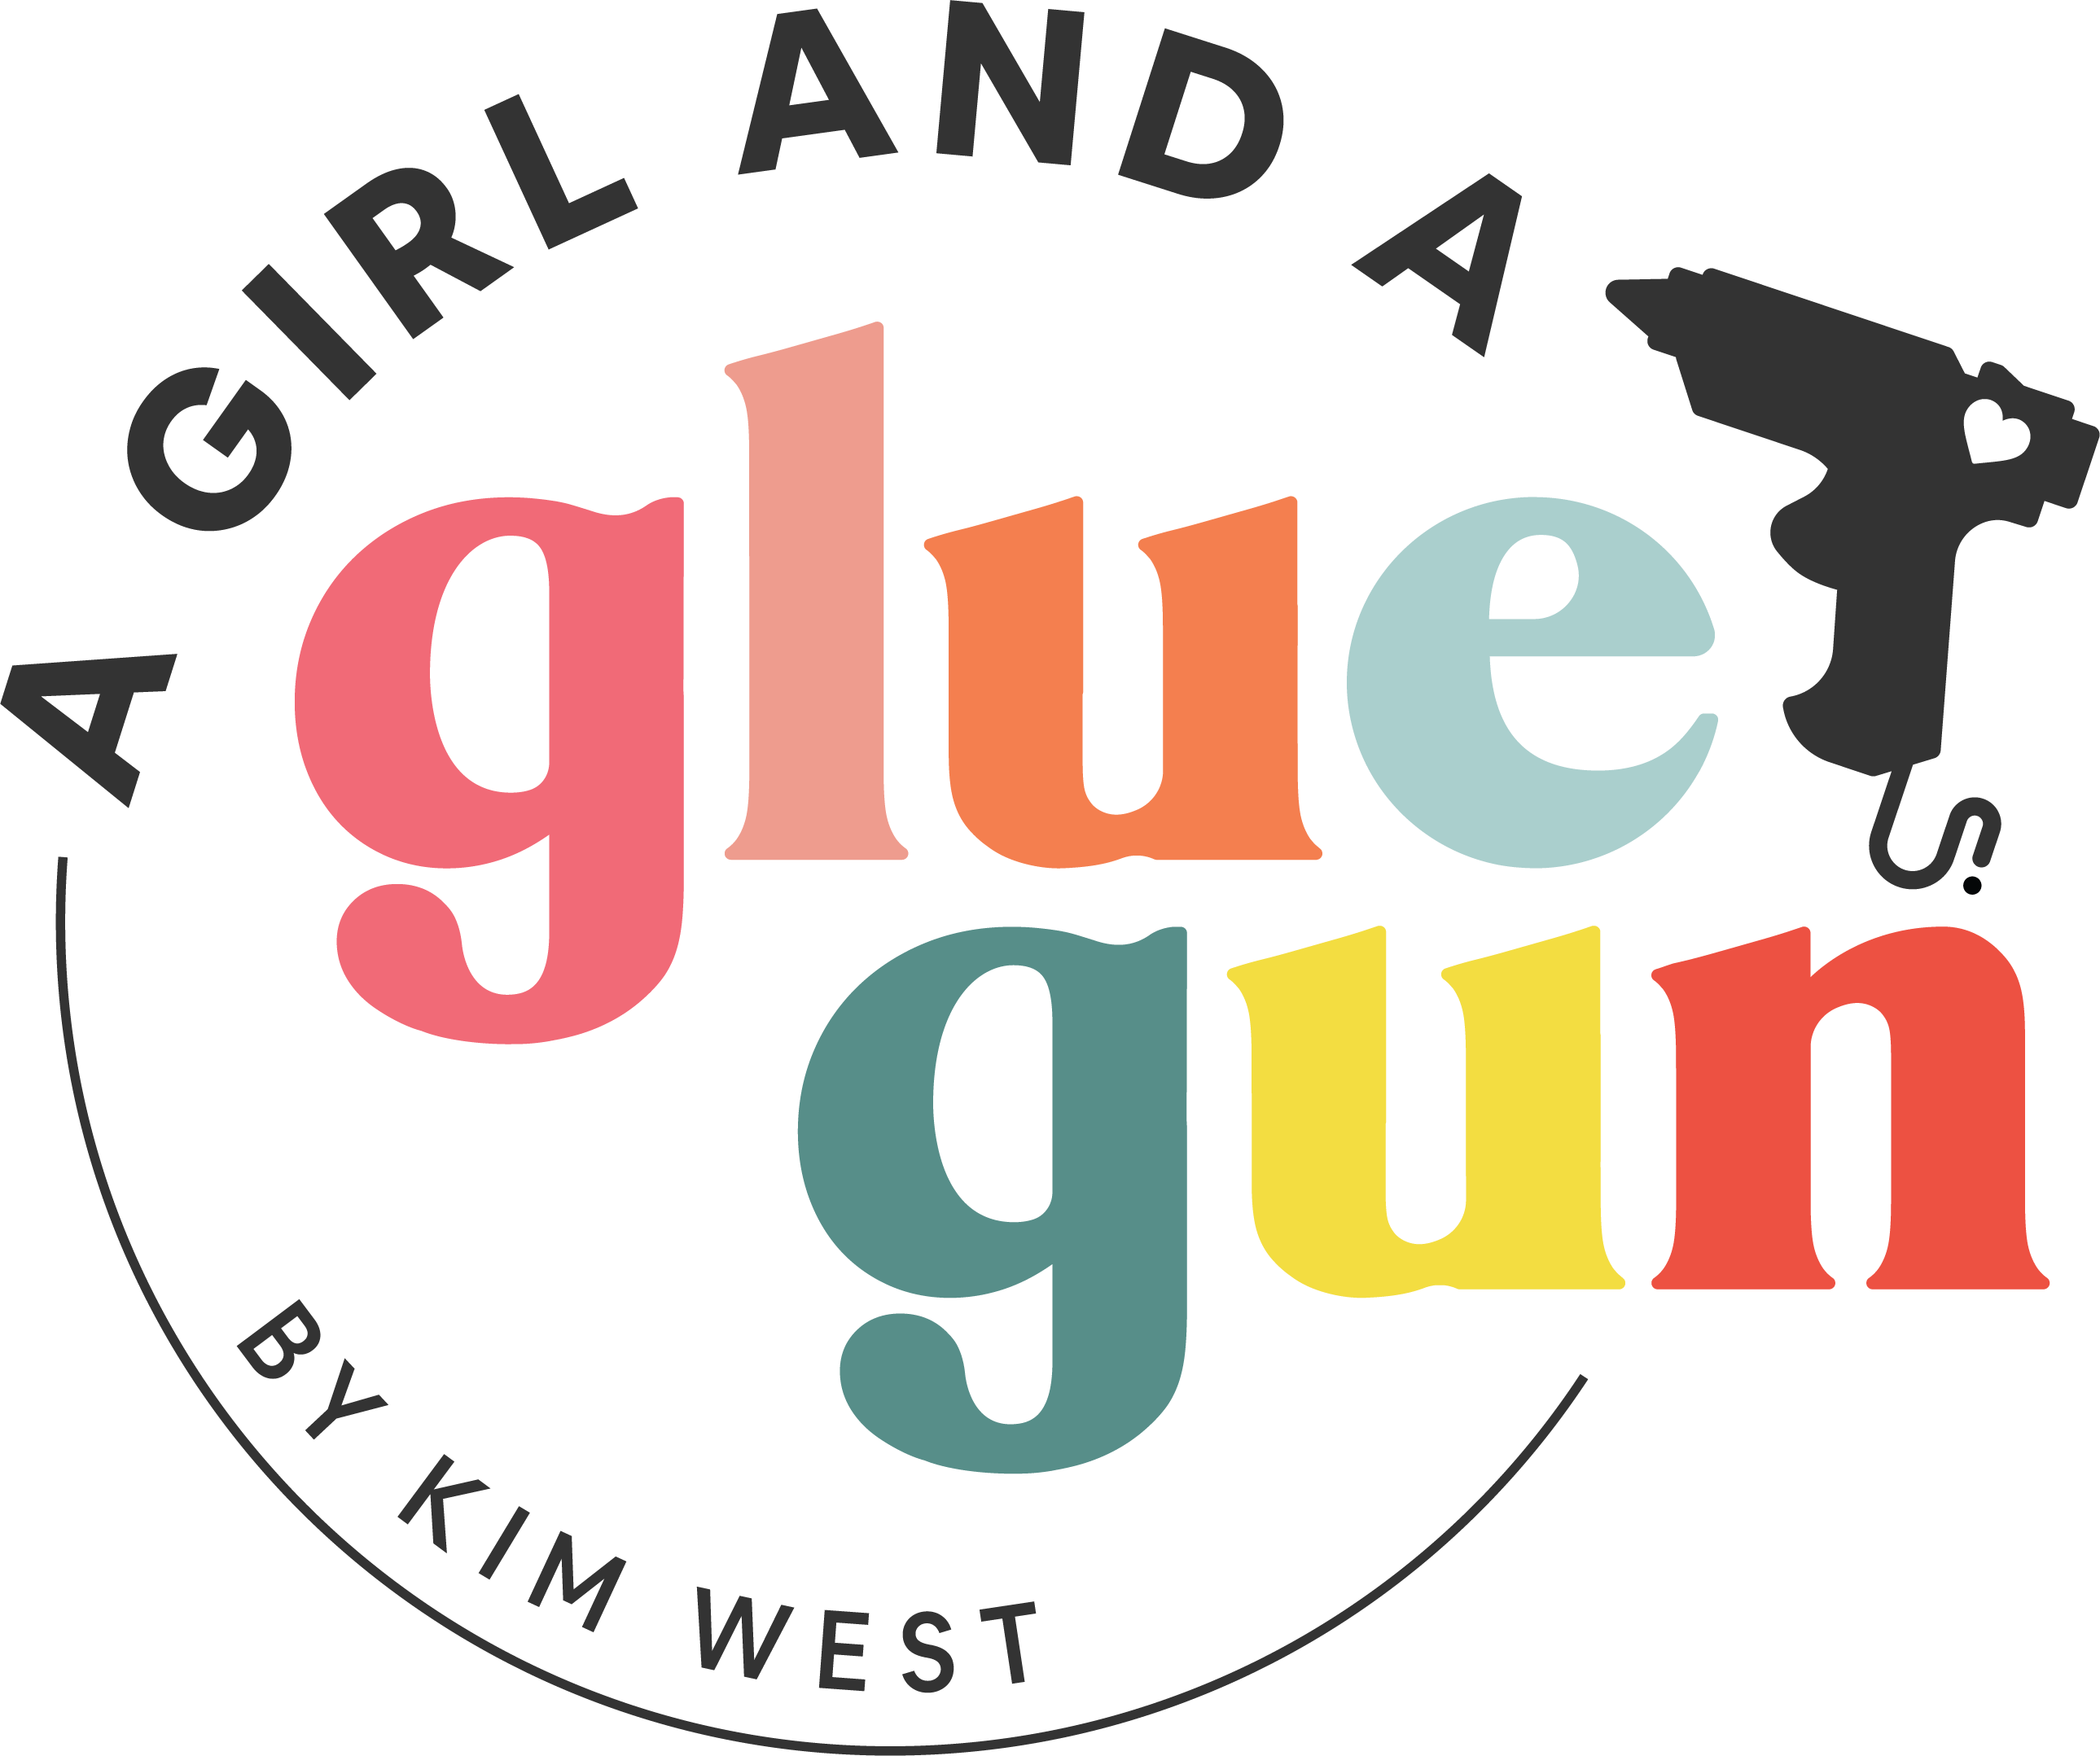 Candy Bar Thank you wrapper printable – A Girl And A Glue Gun